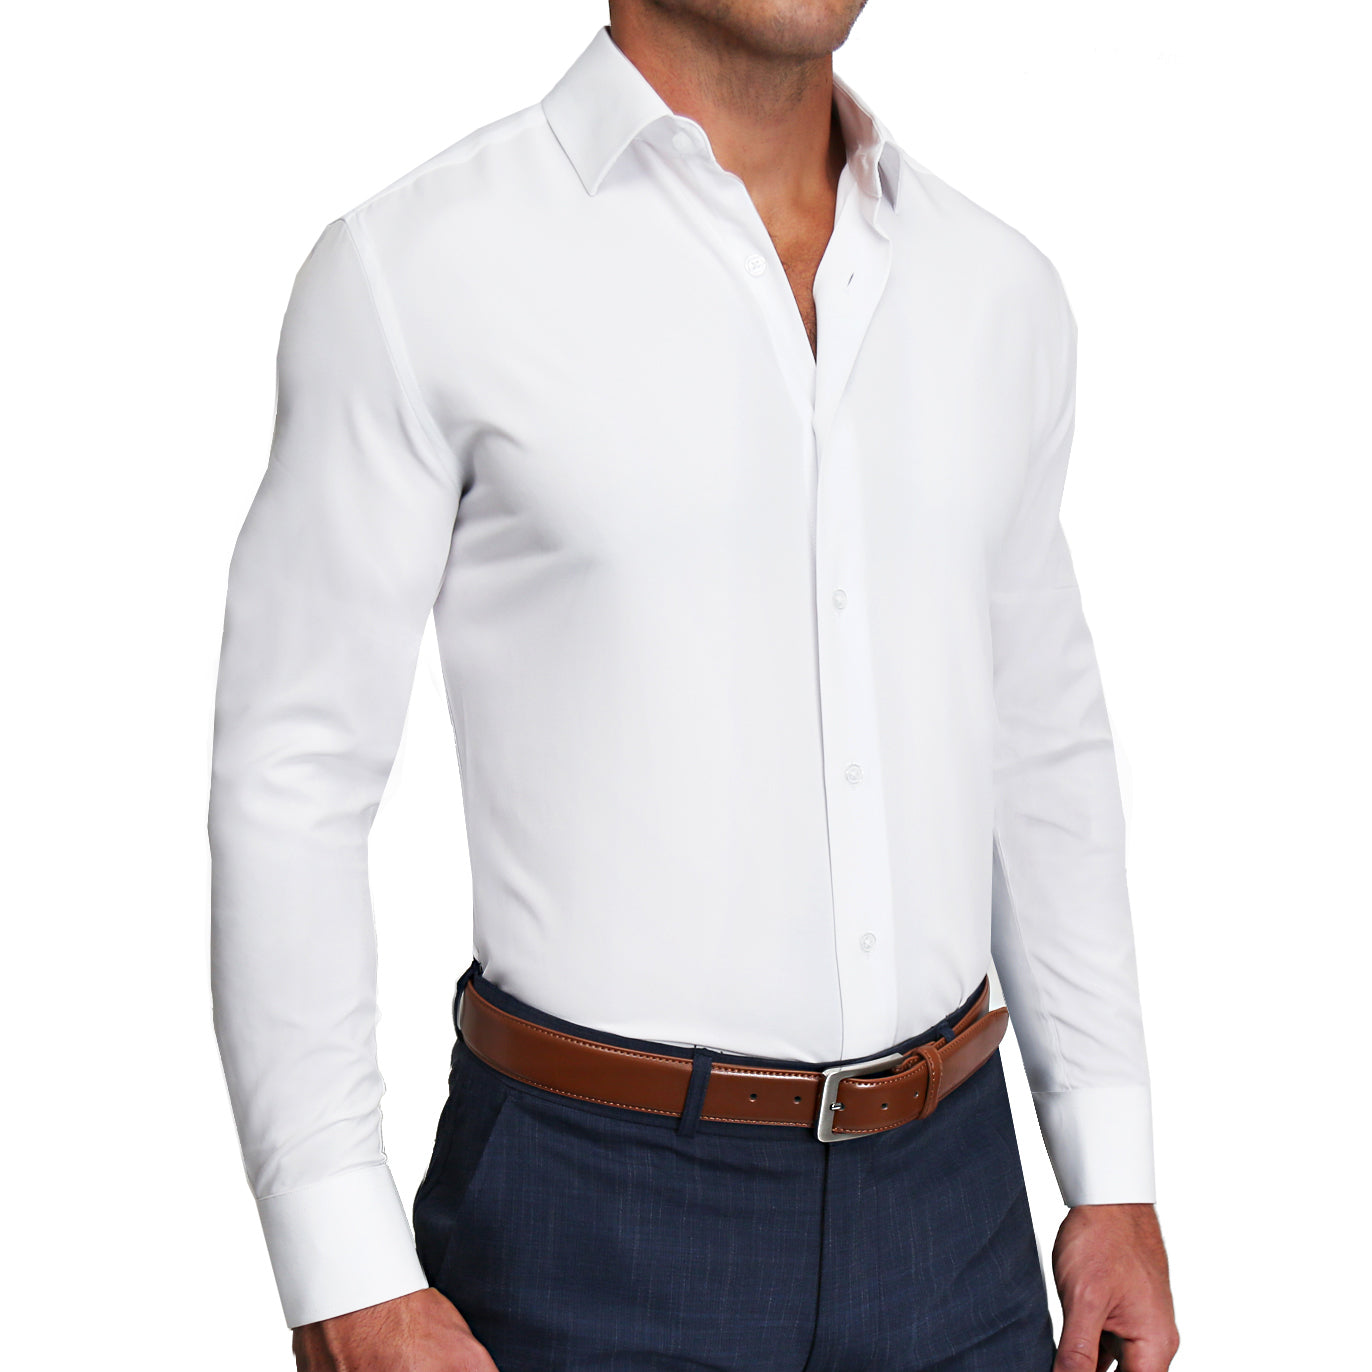 Quality Stays 250 Plastic Collar Stays - 4 Sizes for Men White